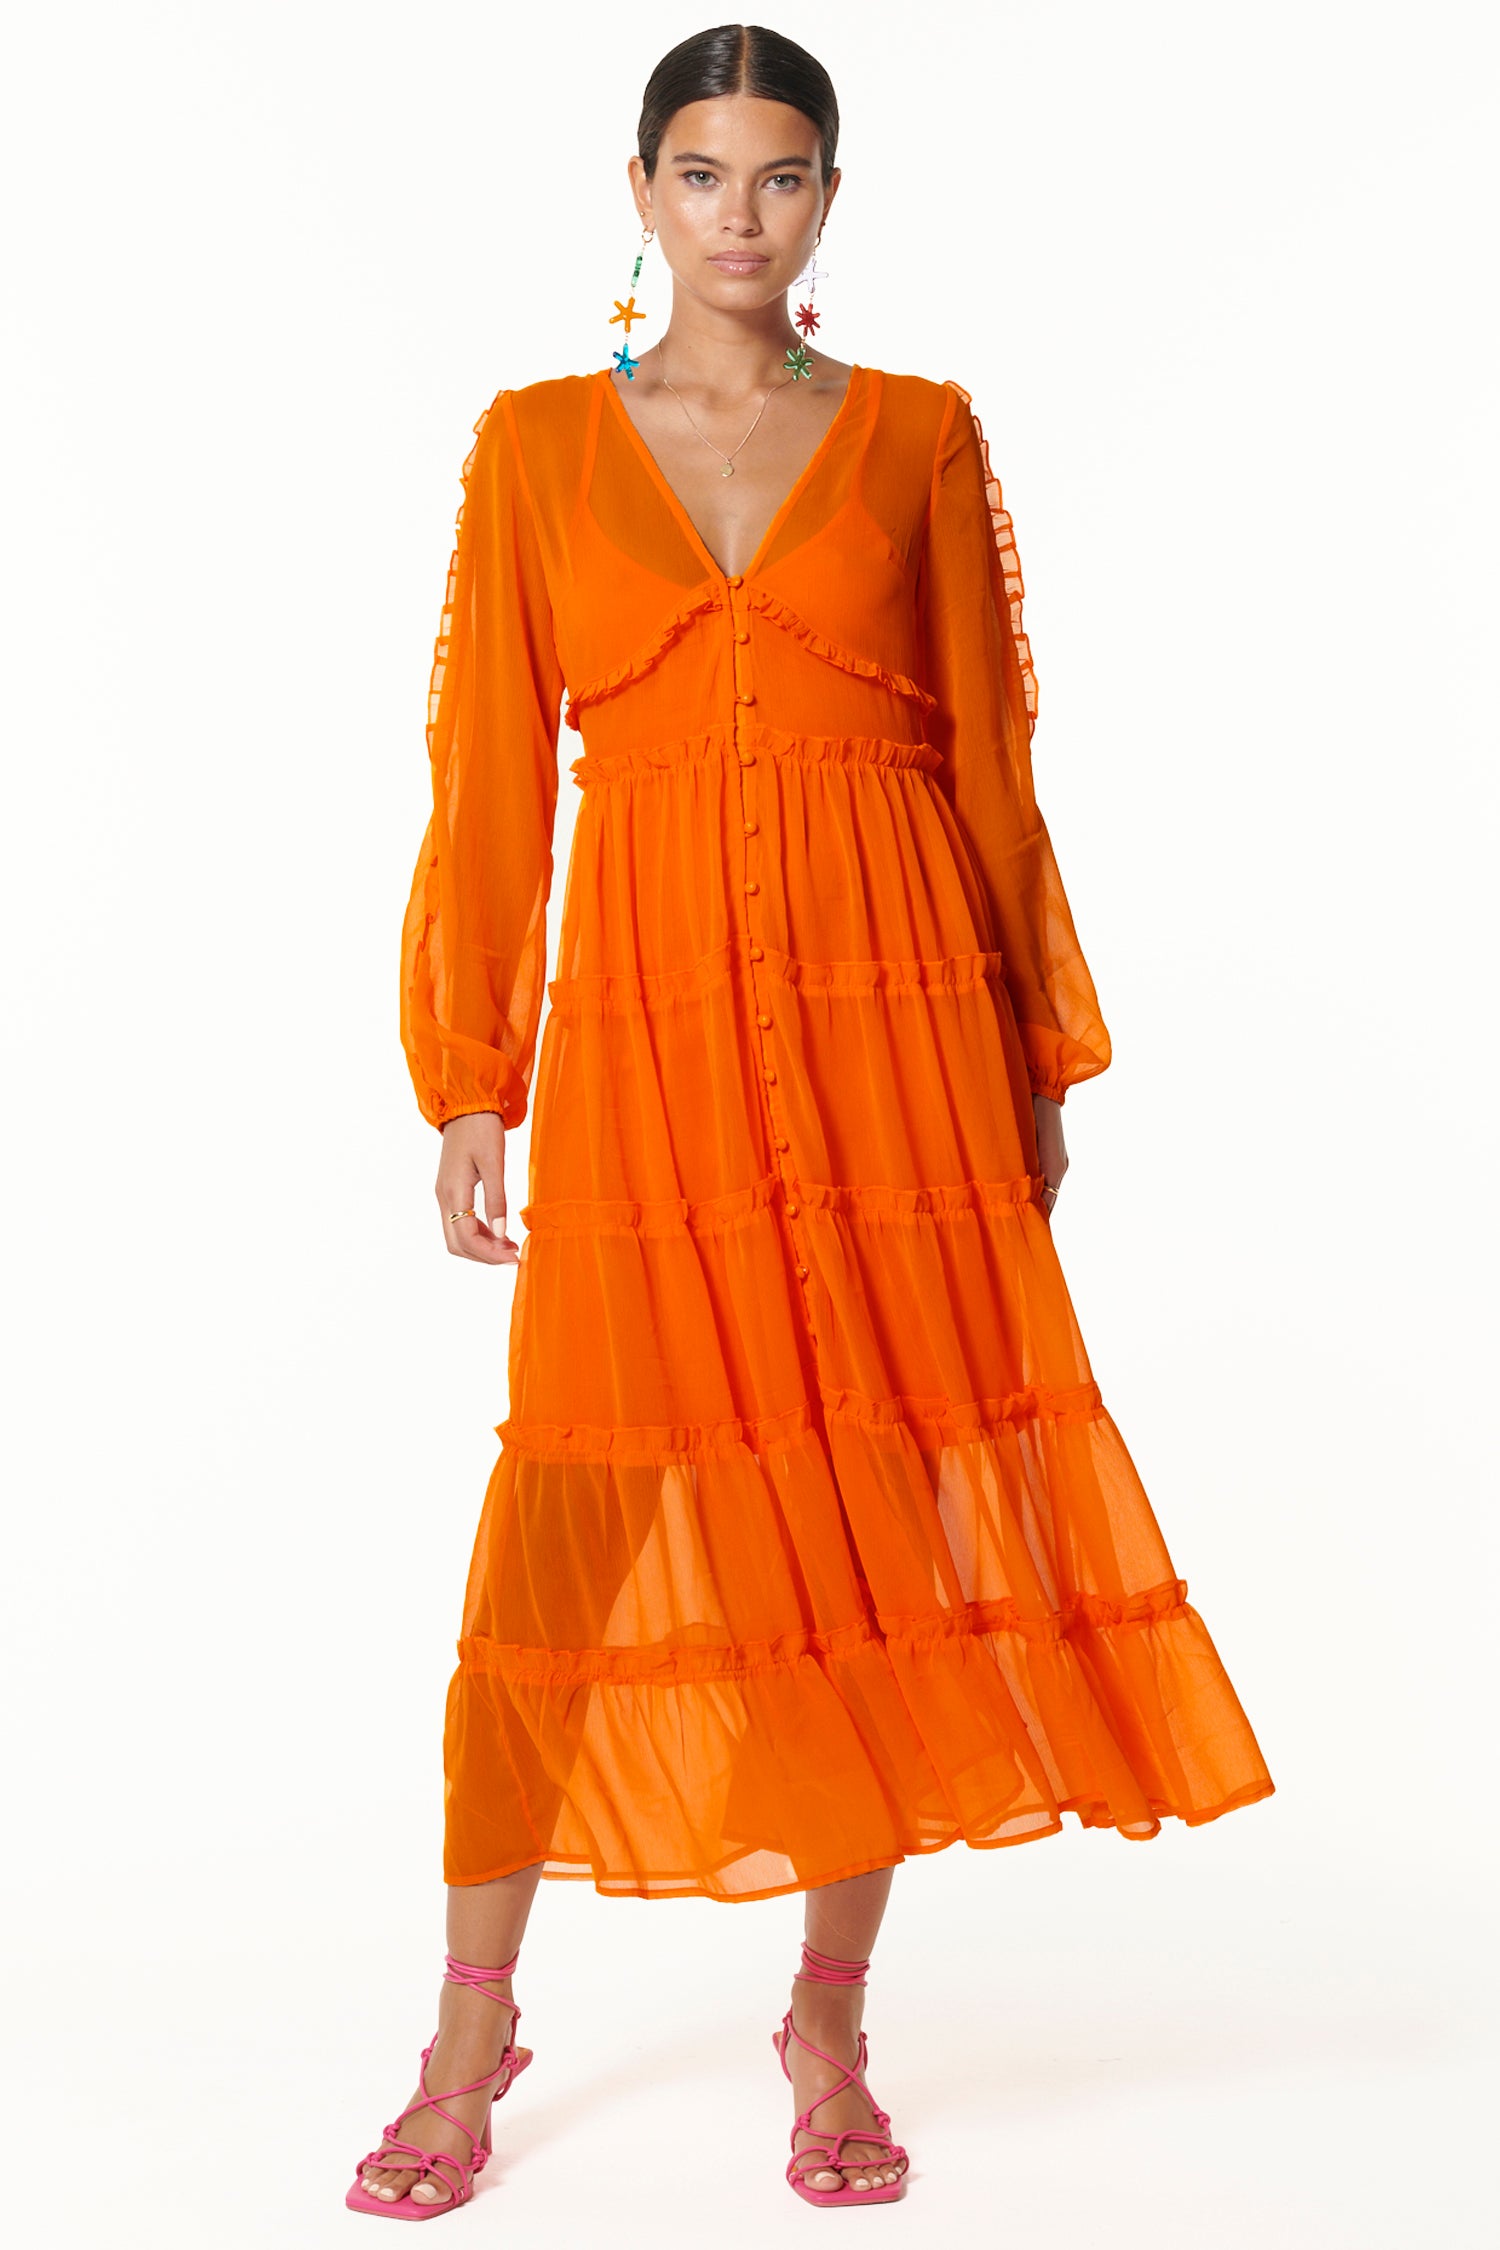 Model wearing Orange Clemmie Dress facing the camera